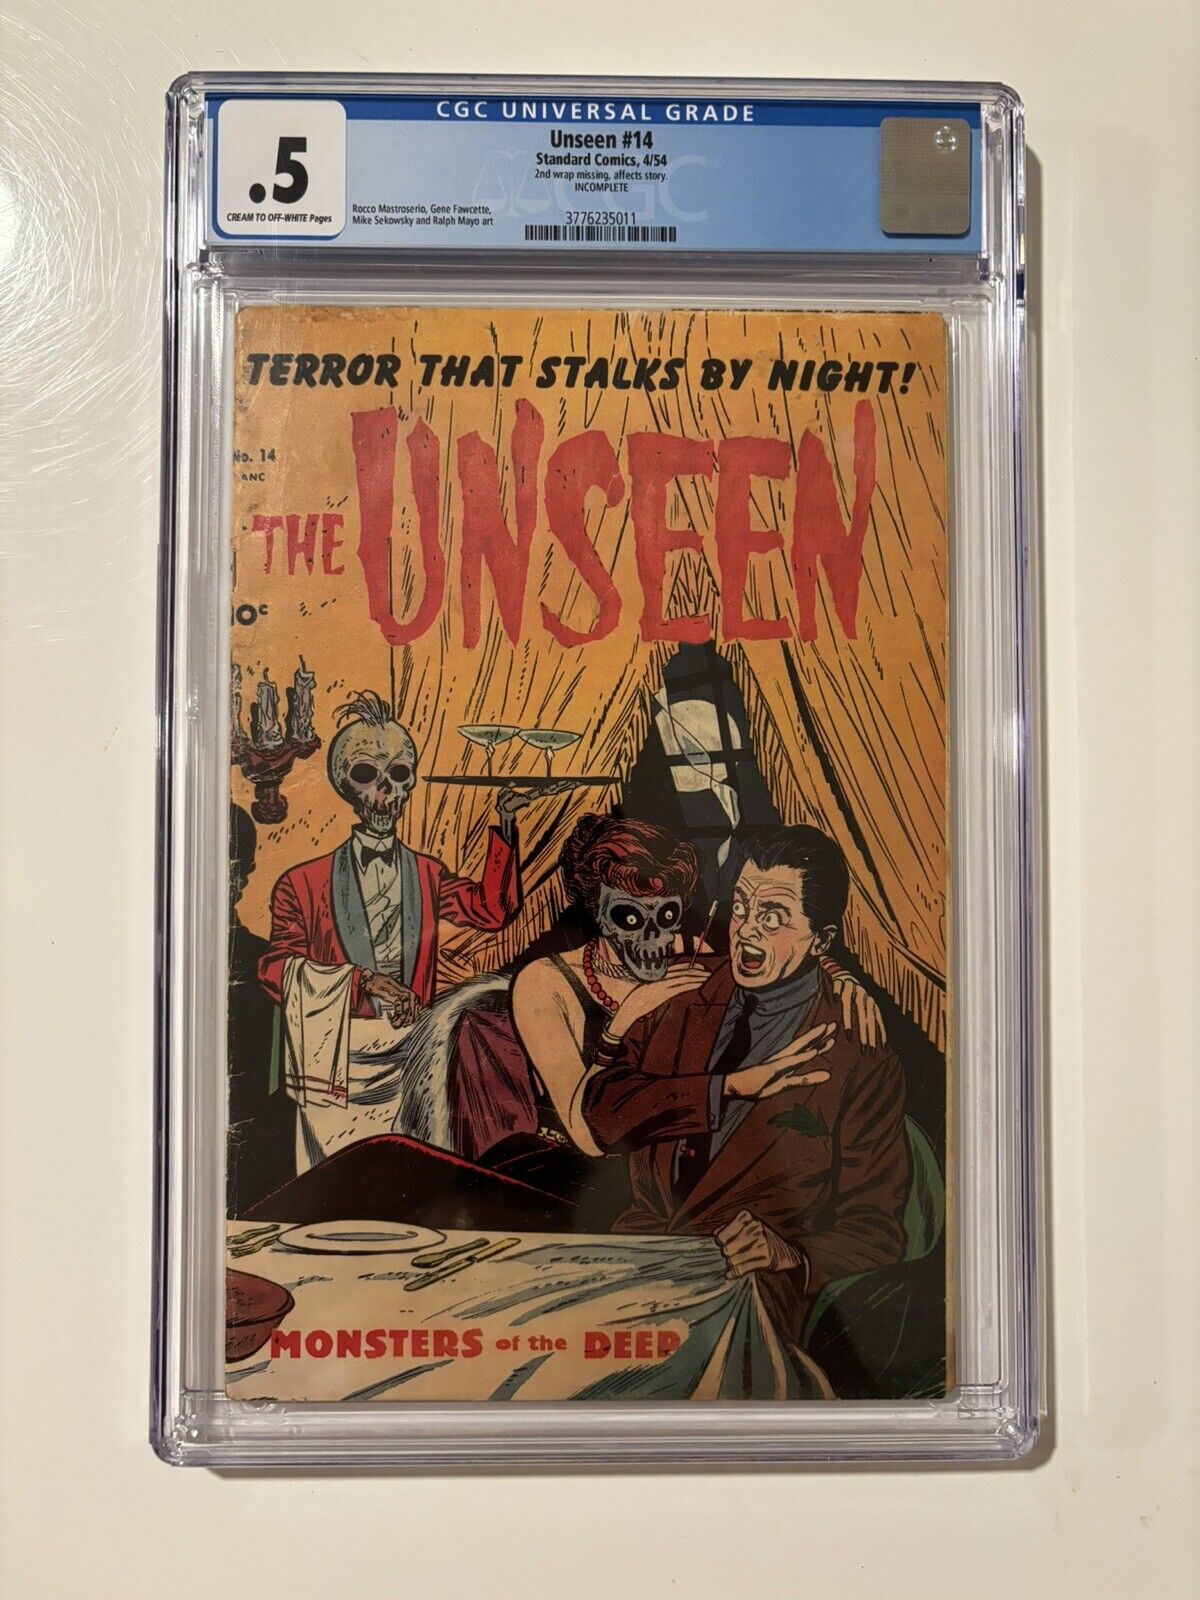 The Unseen #14 (1954) CGC O.5 Rare Pre-Code Horror Comic Book (see description)